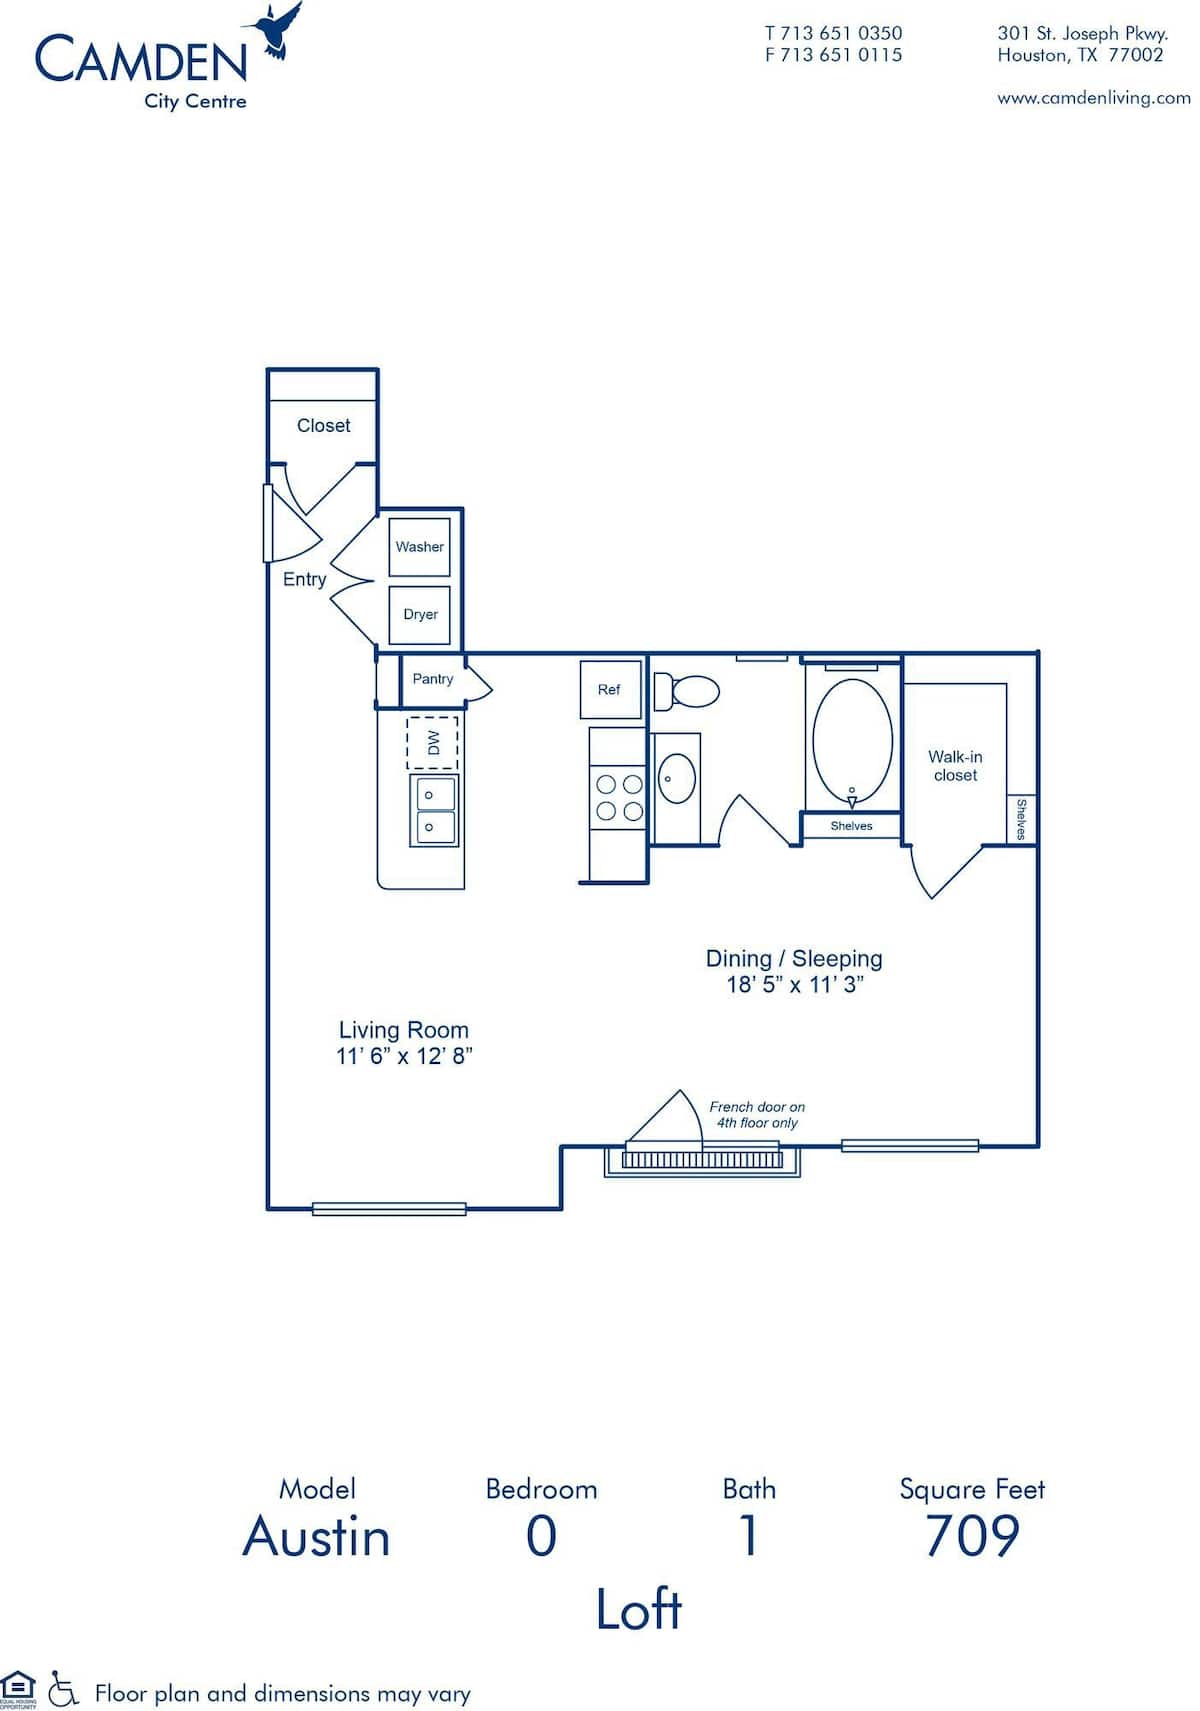 Floorplan diagram for Austin, showing Studio